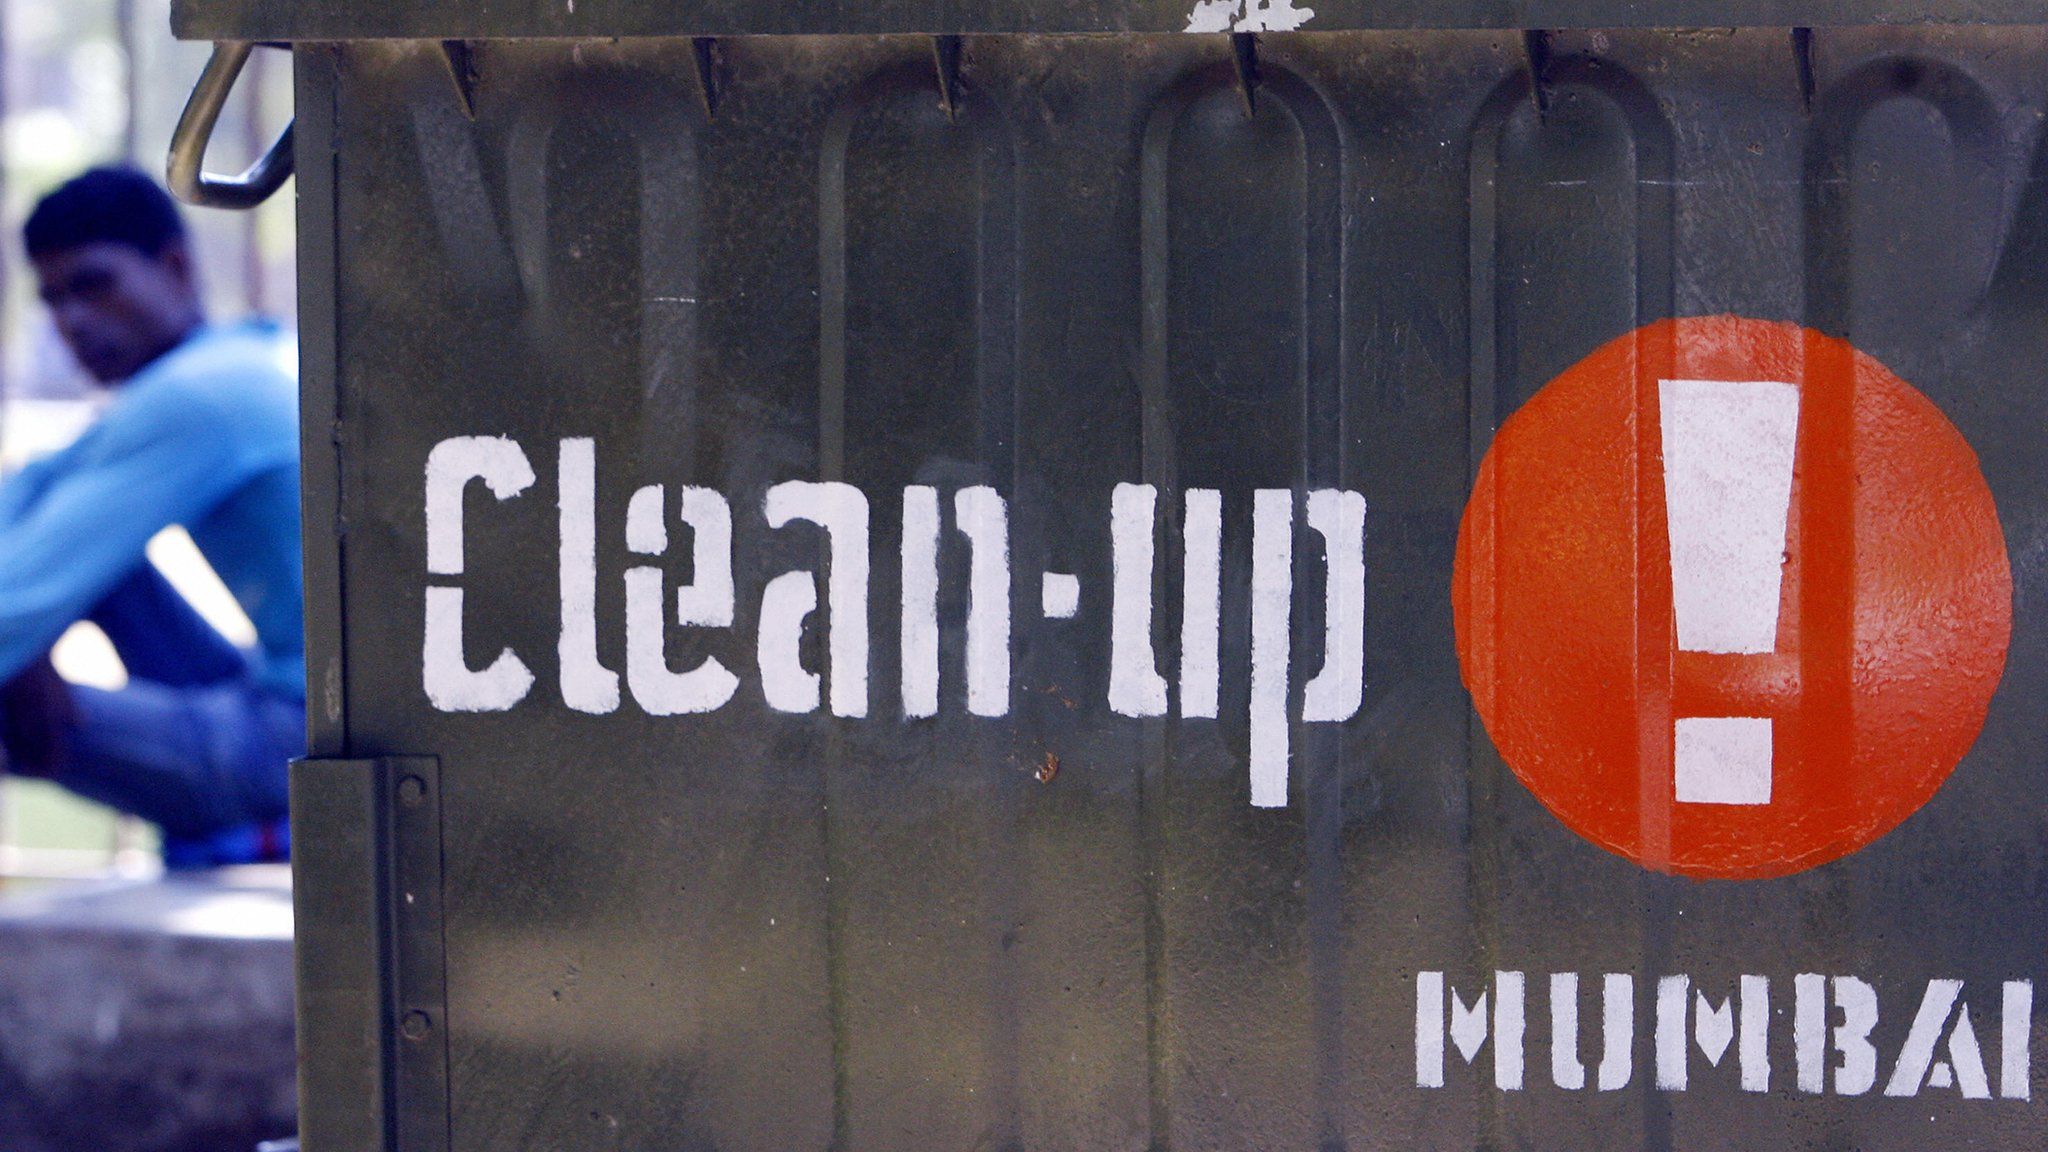 Message on large bin to clean up Mumbai